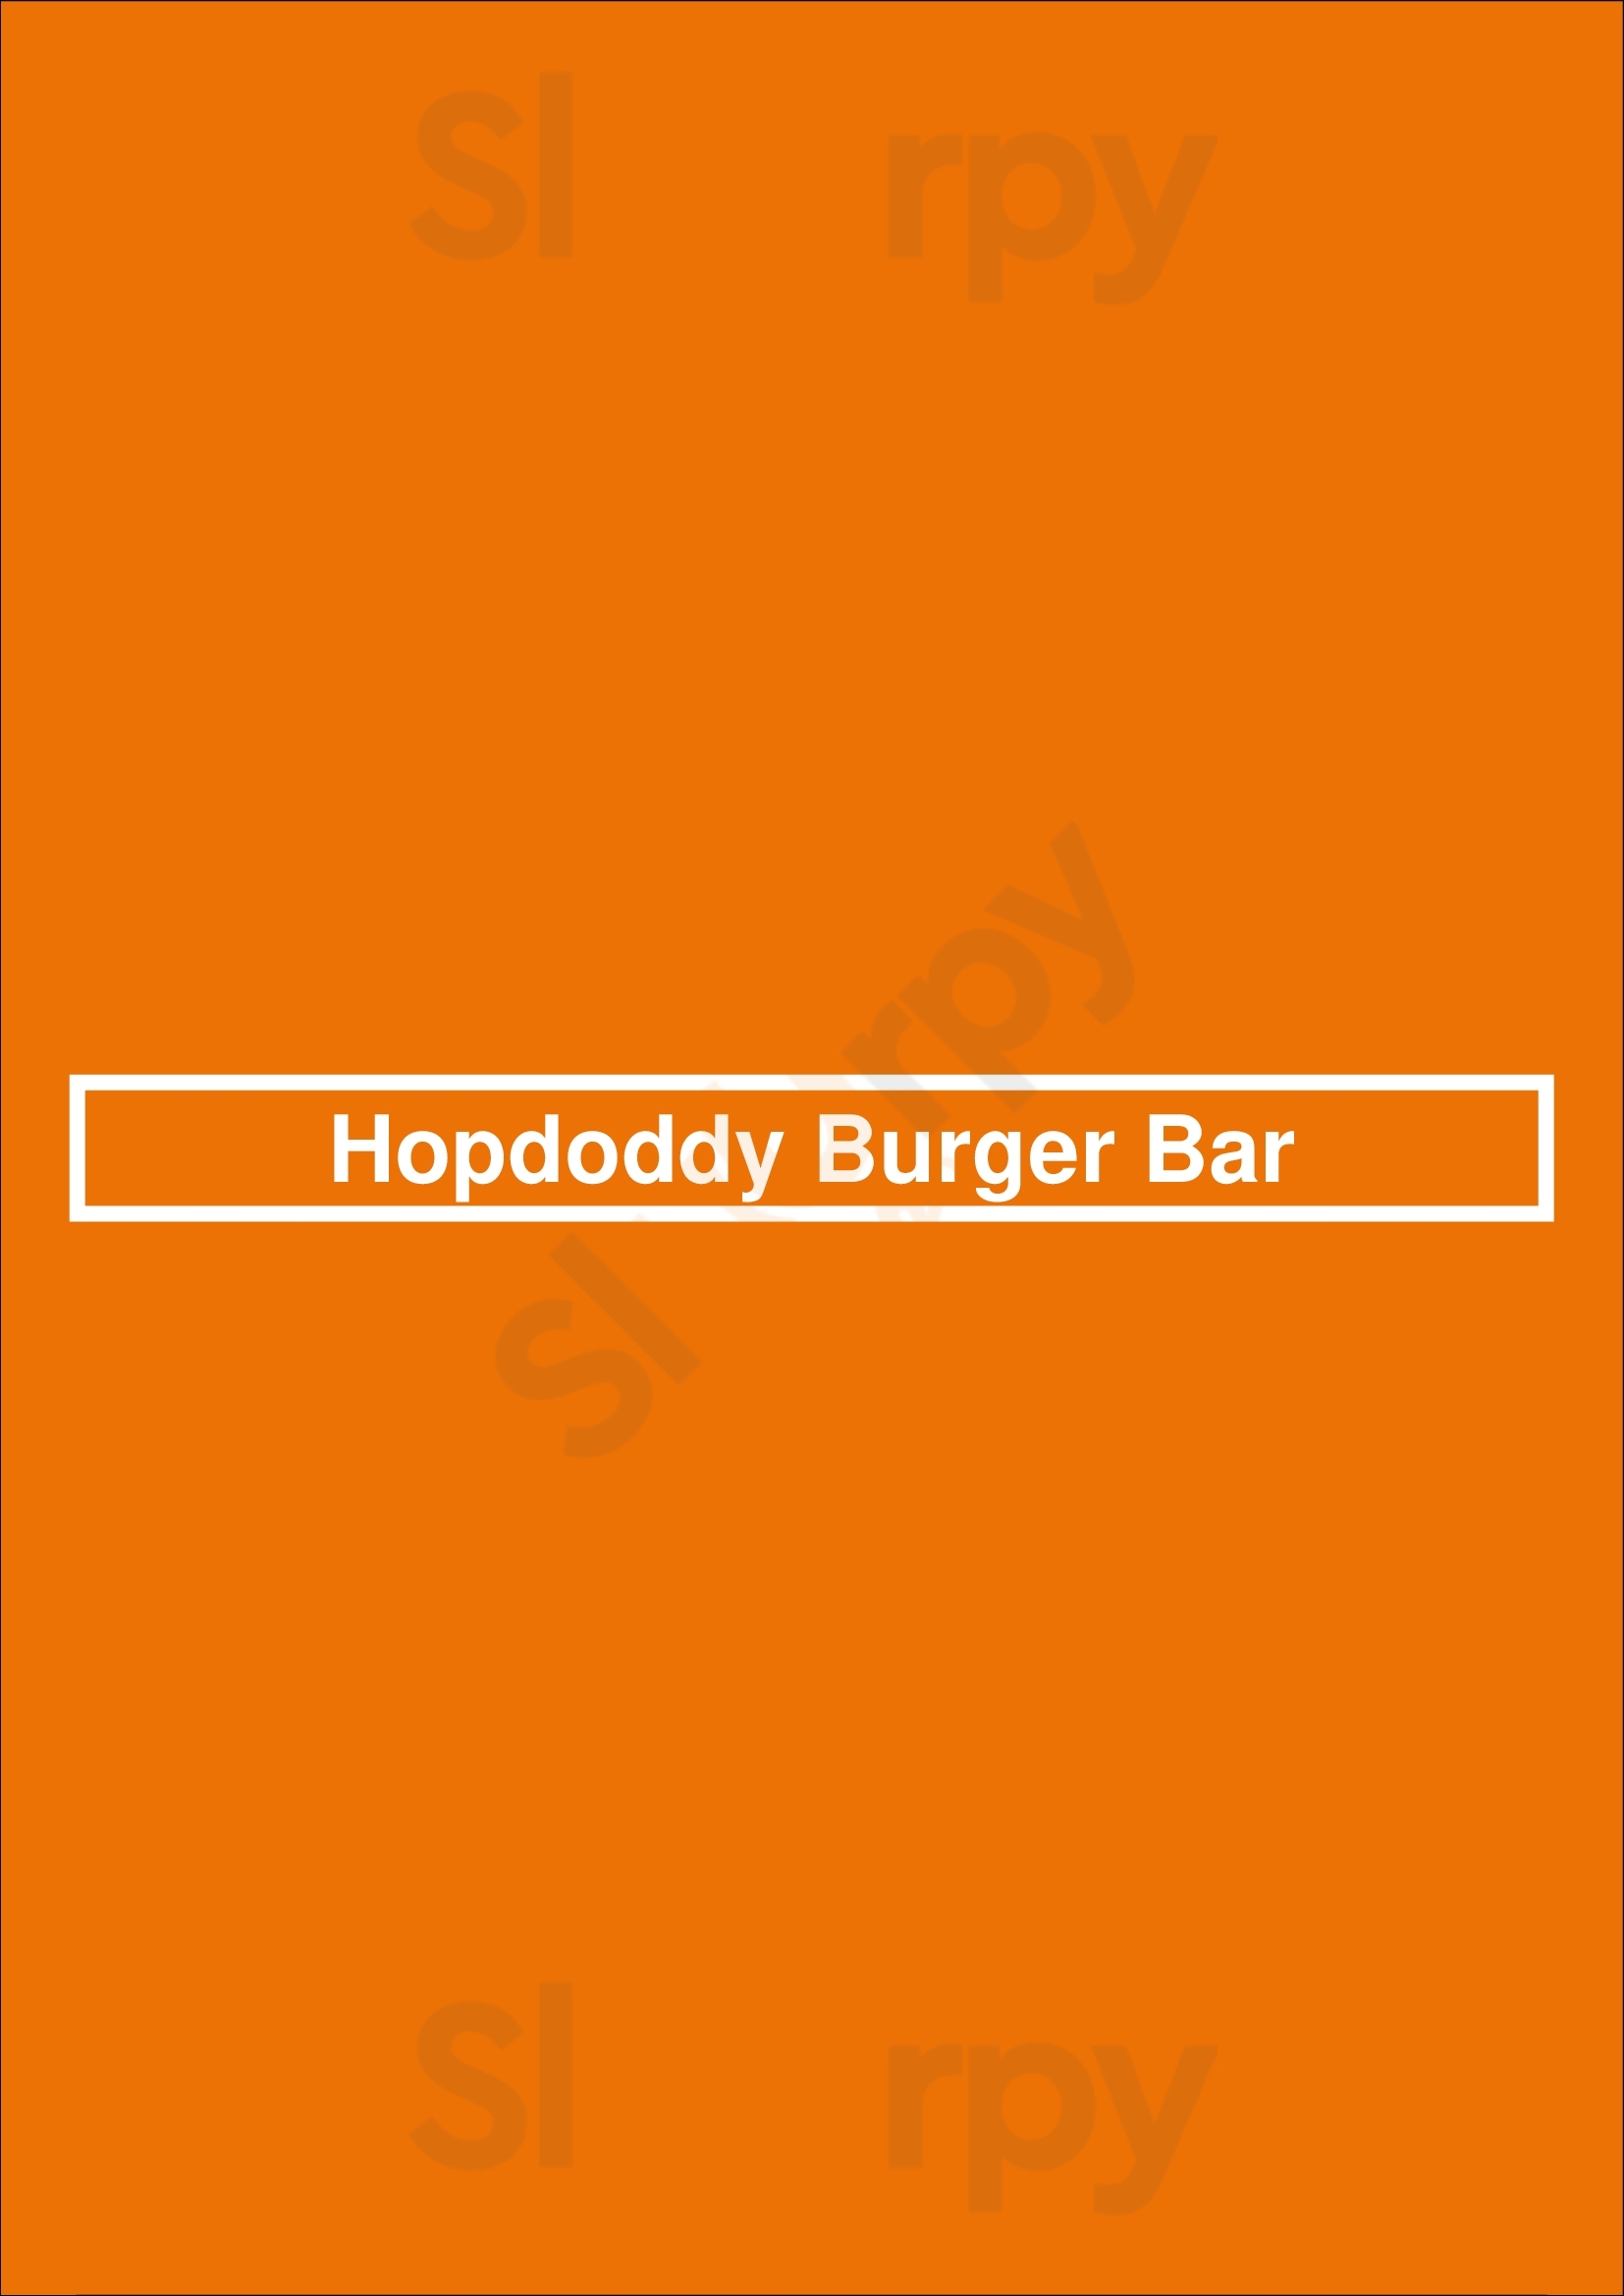 Hopdoddy Burger Bar Addison Menu - 1